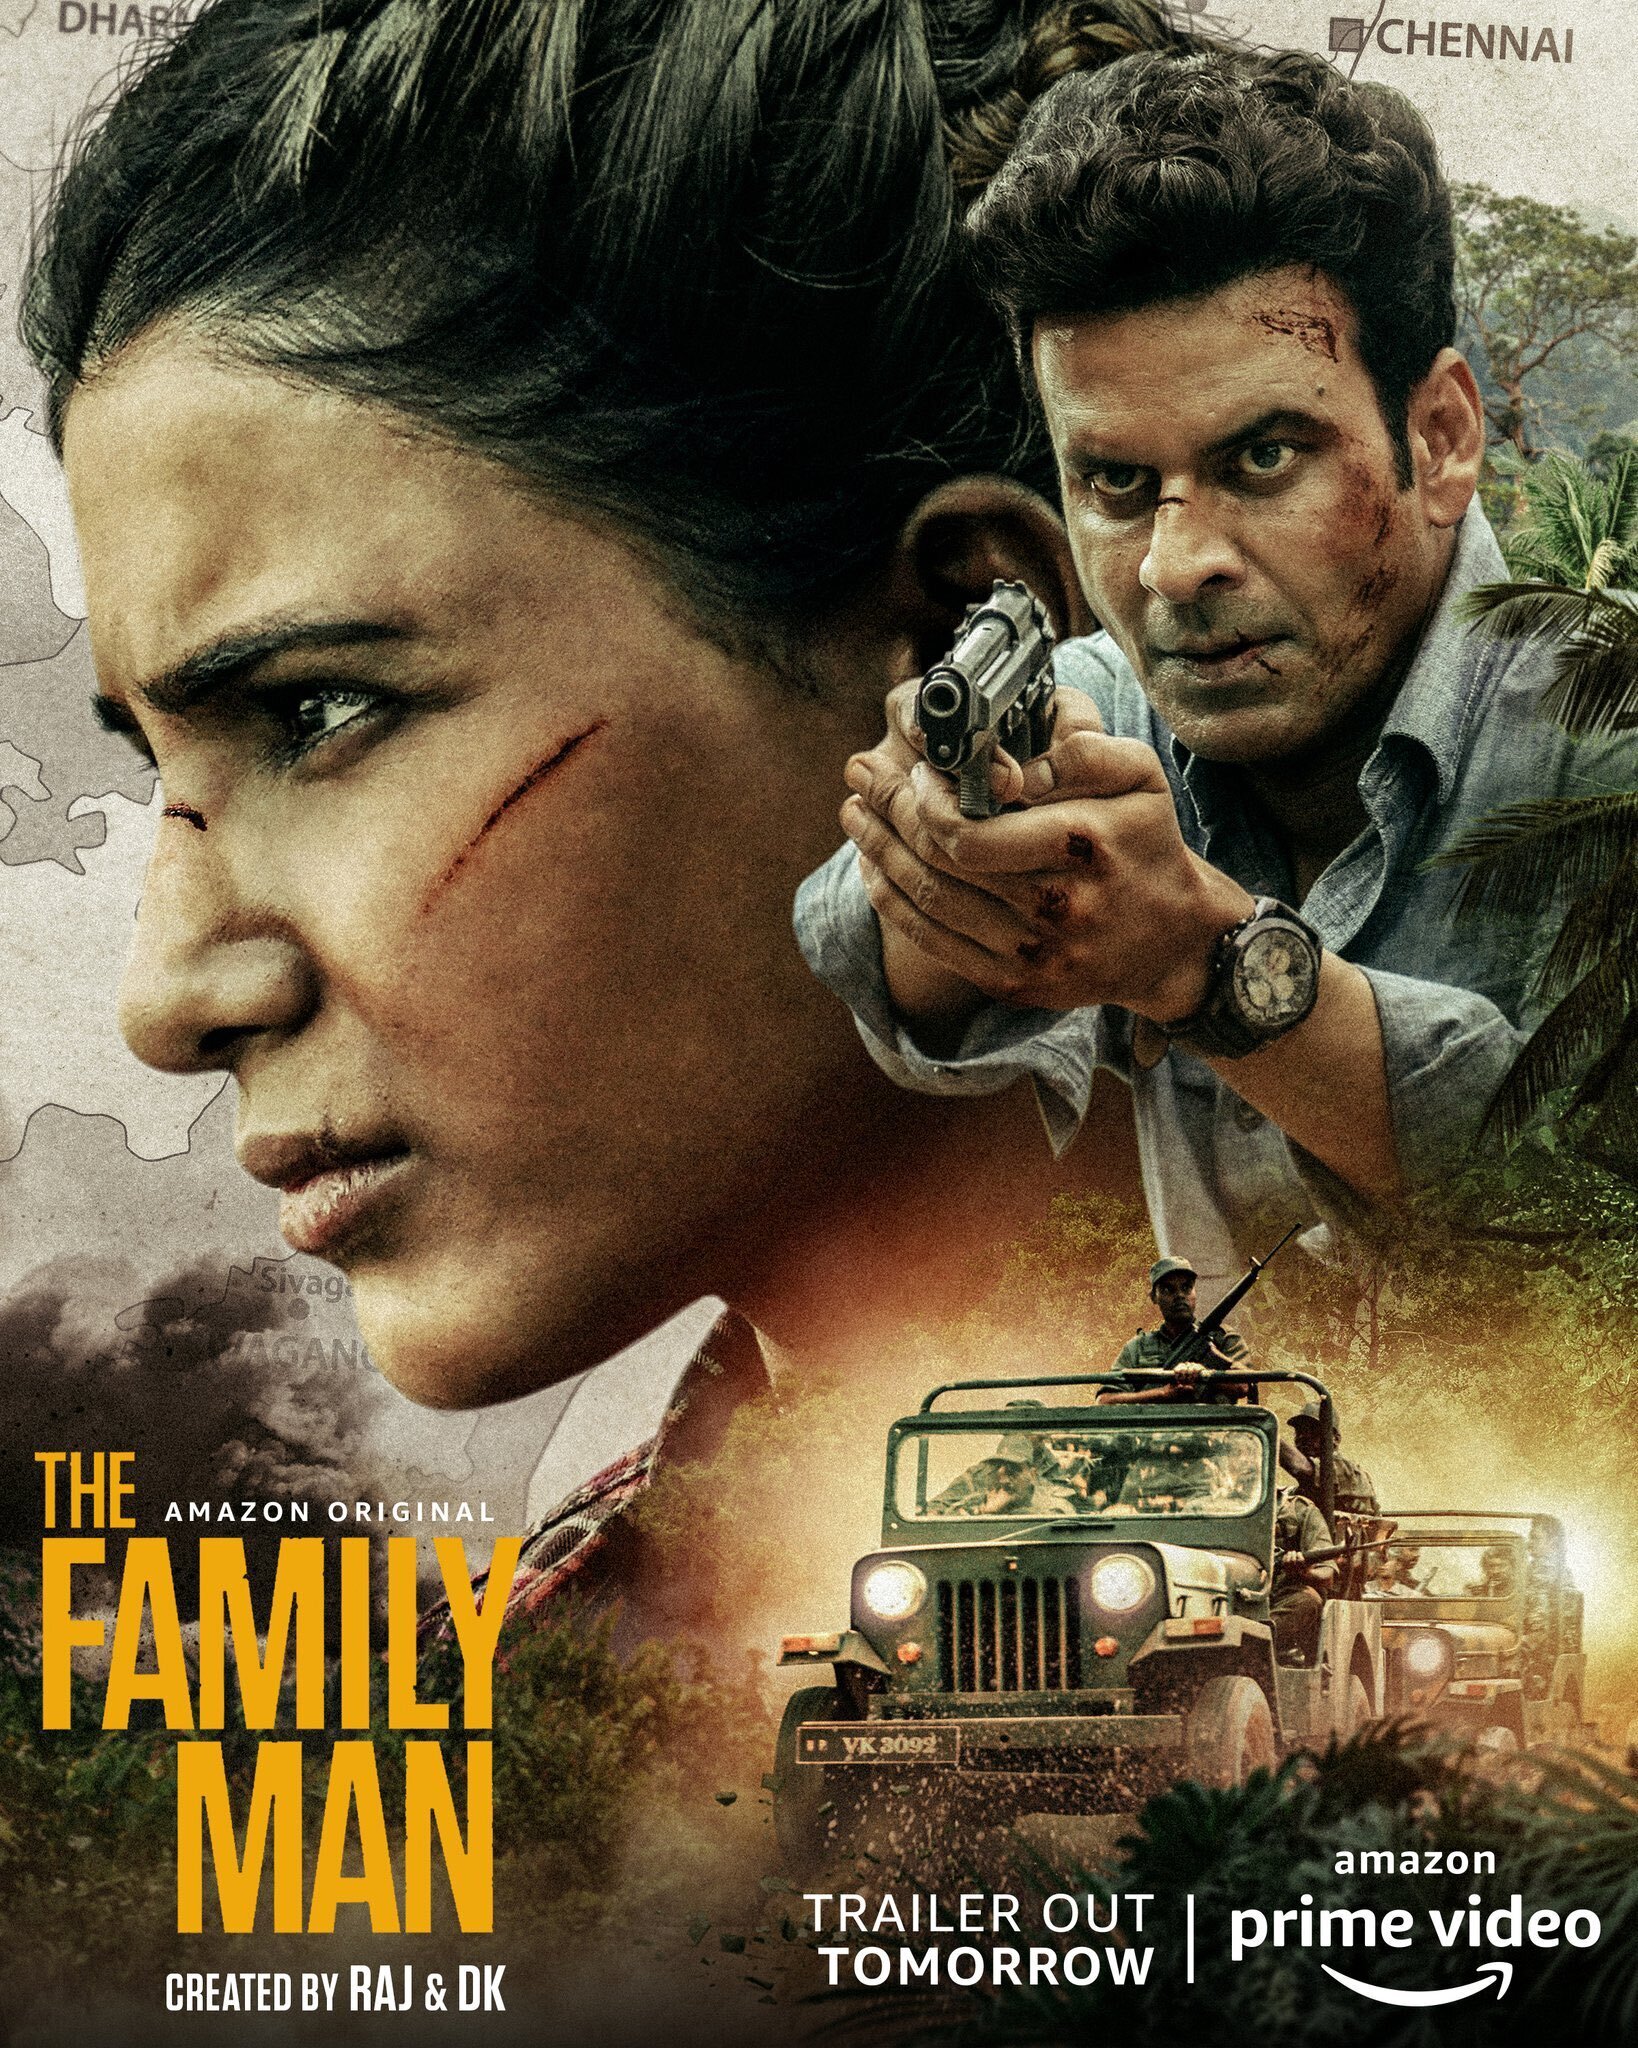 The Family Man season 2 trailer release date